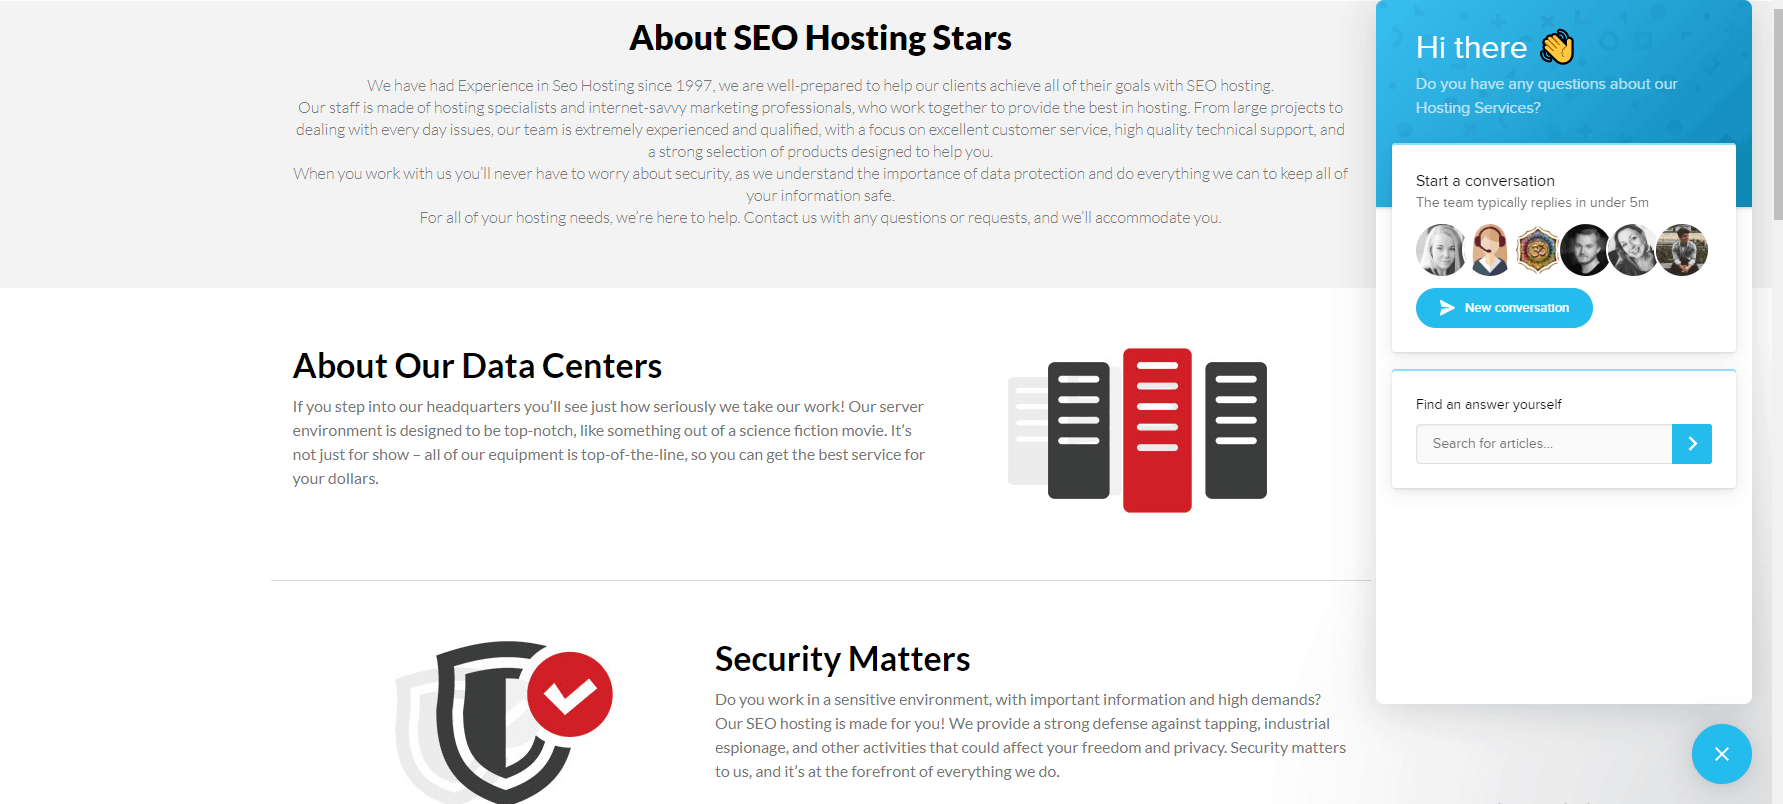 seo hosting stars overview2